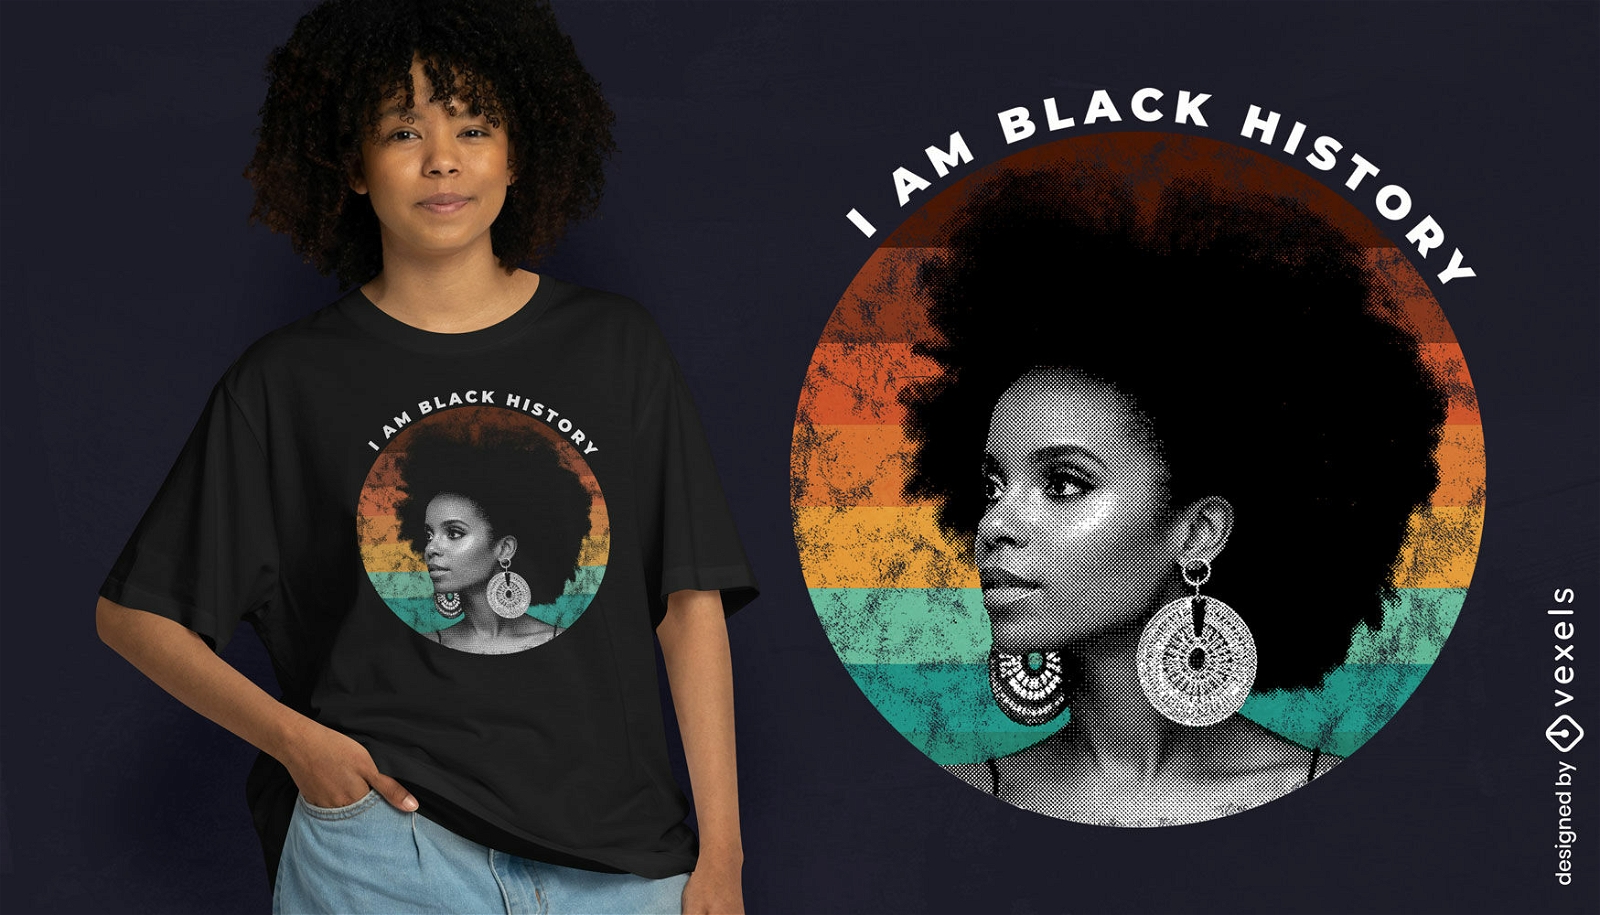 Black history pride t-shirt design